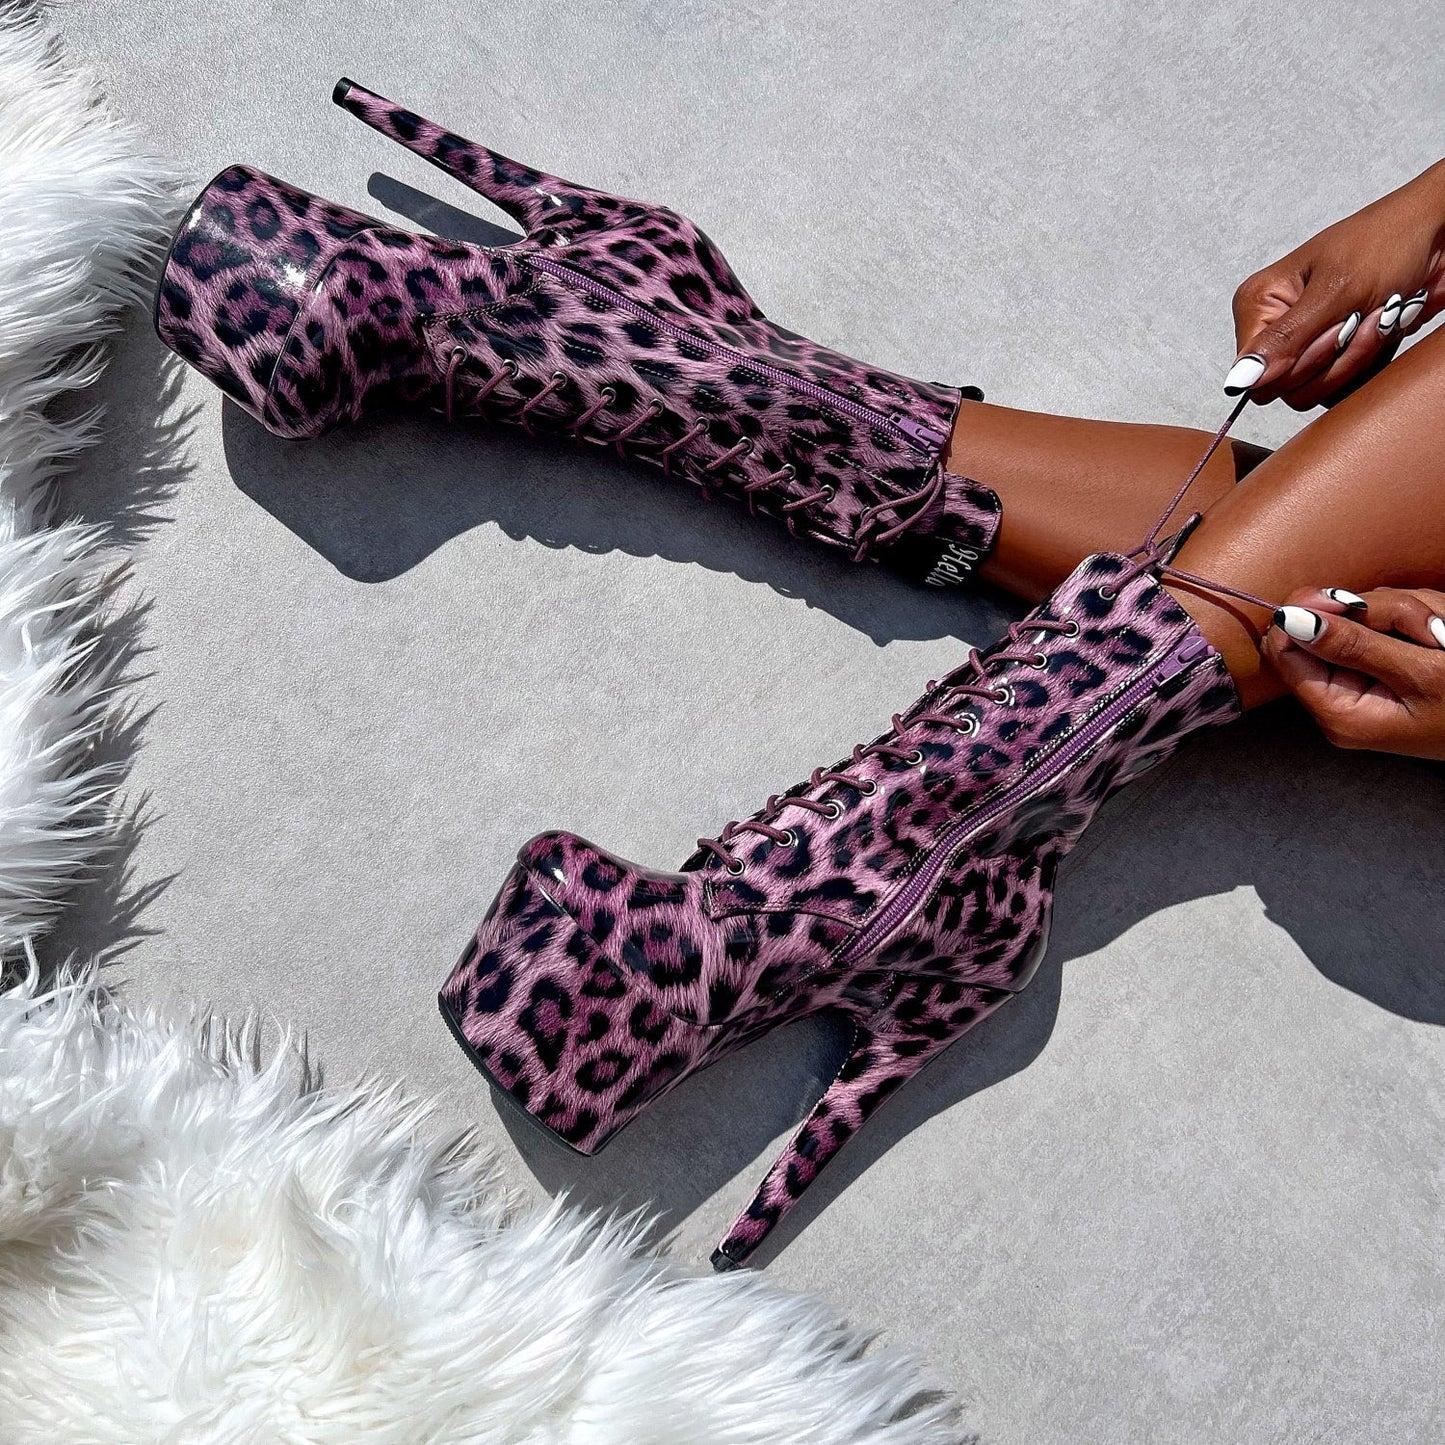 Purple Leopard Boot - 7 INCH, stripper shoe, stripper heel, pole heel, not a pleaser, platform, dancer, pole dance, floor work